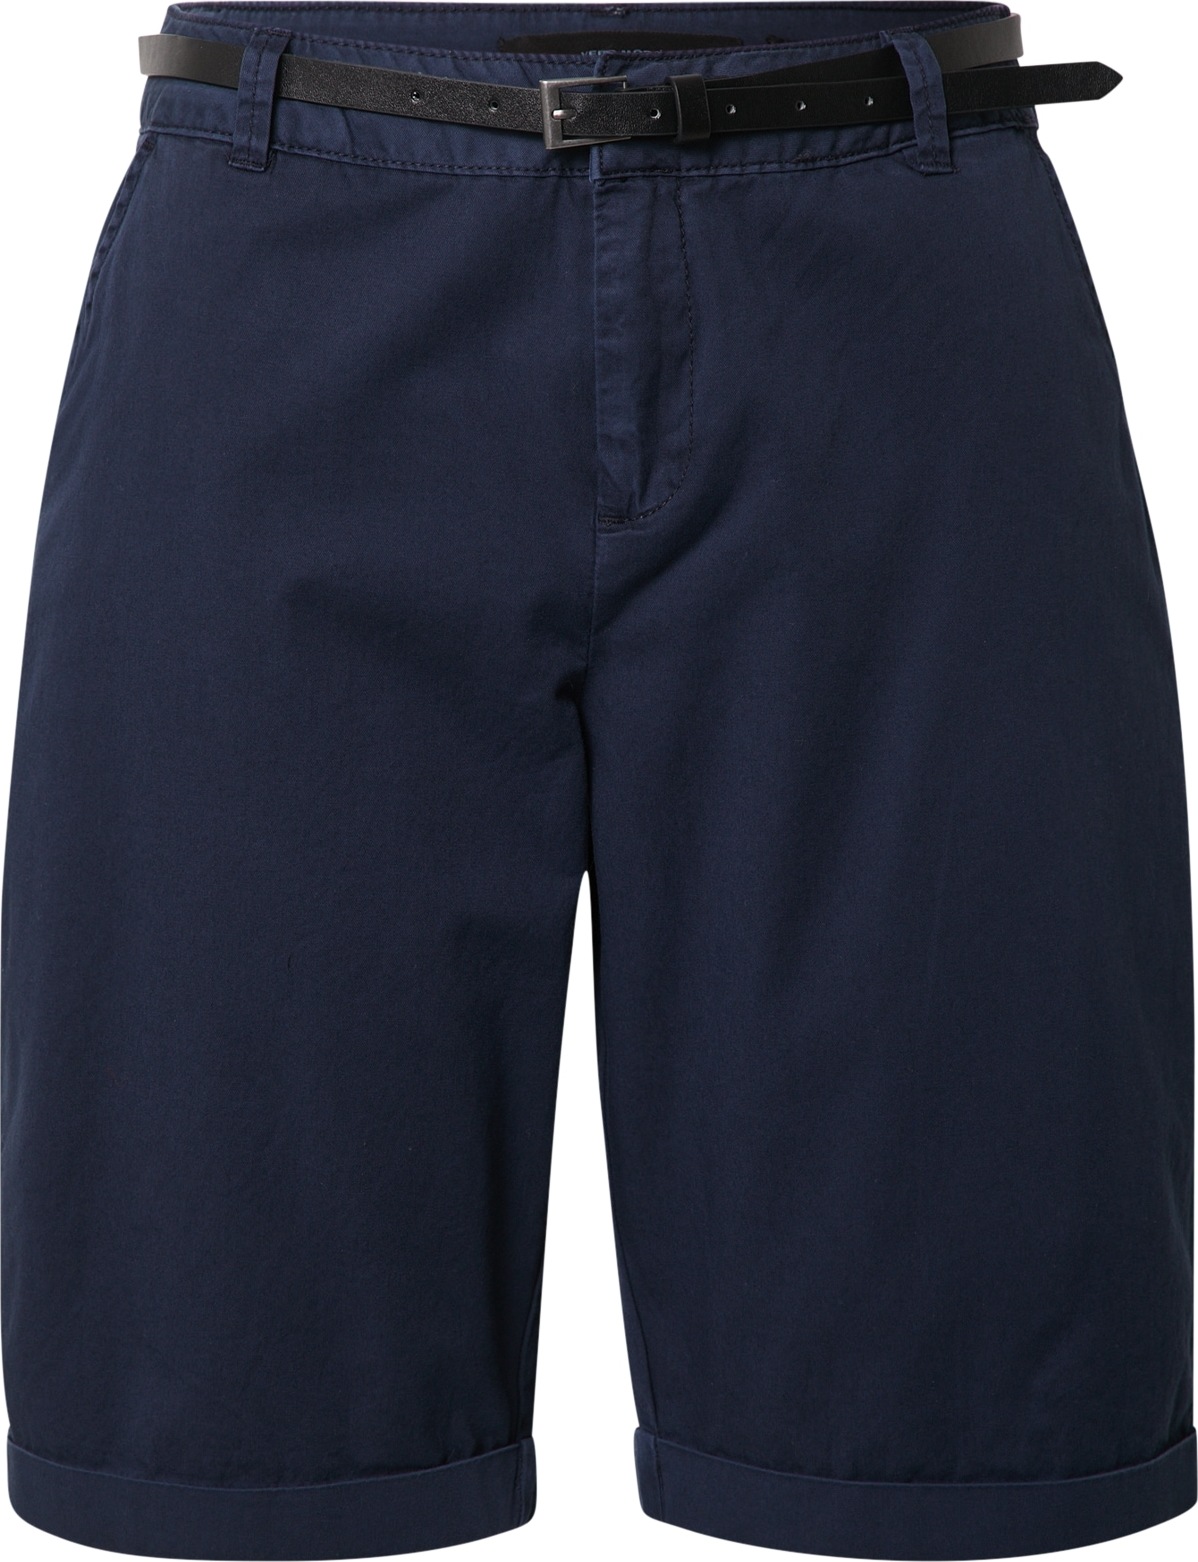 VERO MODA Chino kalhoty 'FLASH' námořnická modř